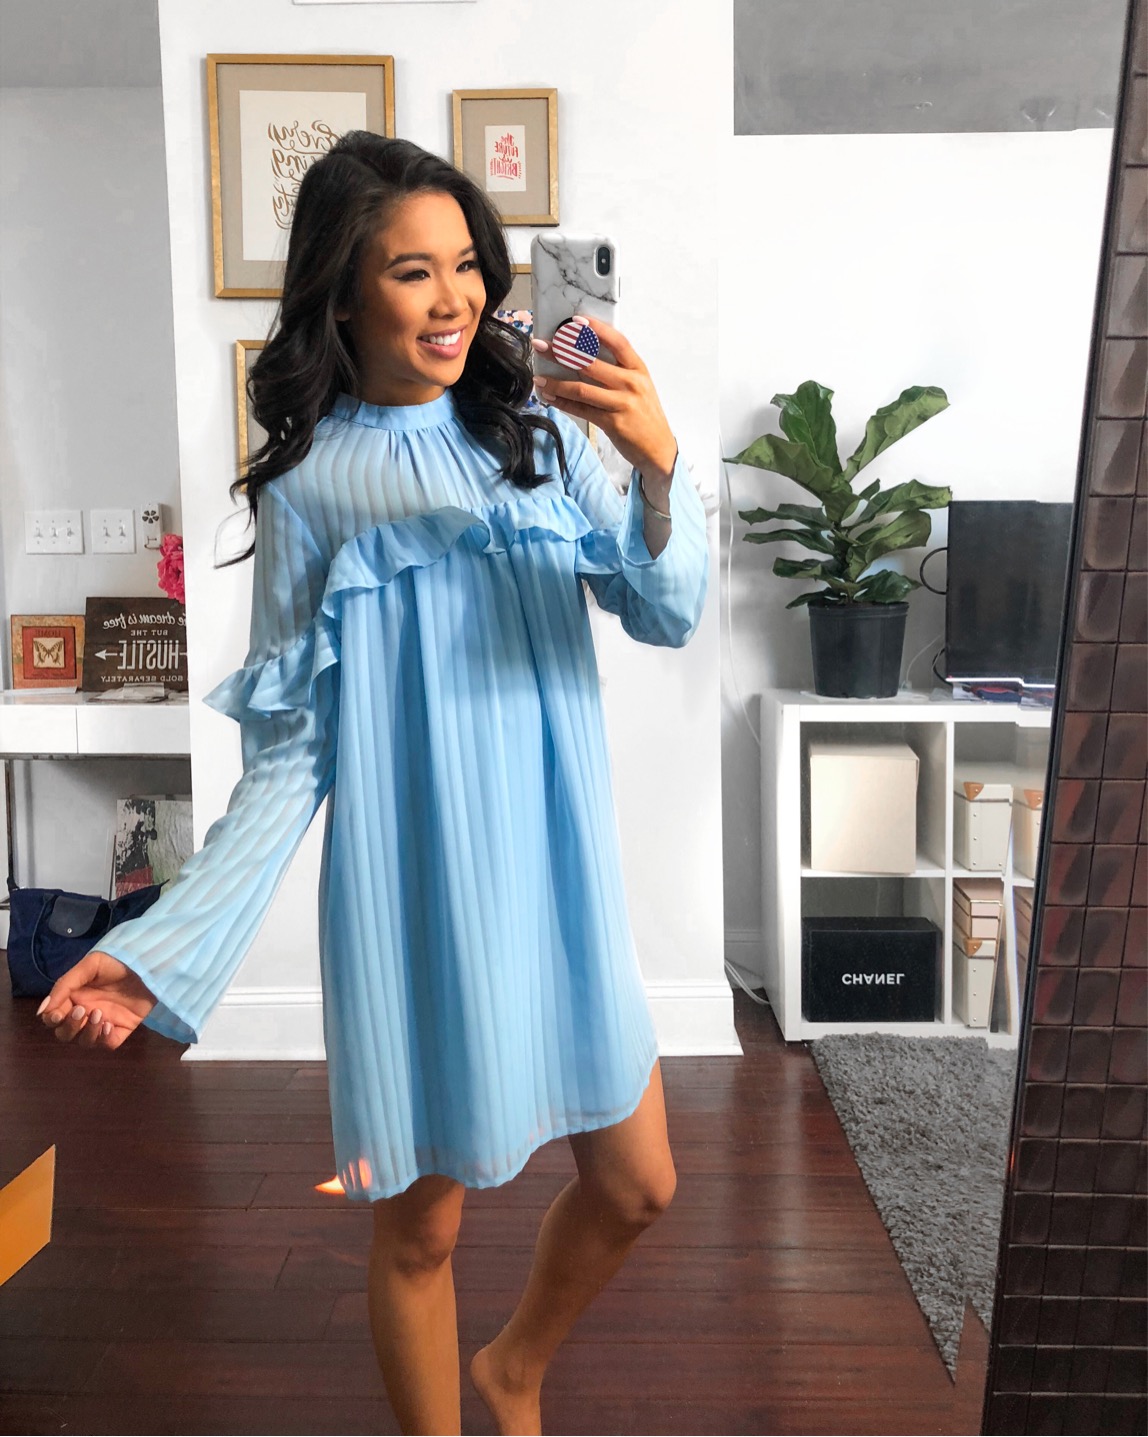 Shopbop Sale 2018 Picks including a blue striped ruffle dress